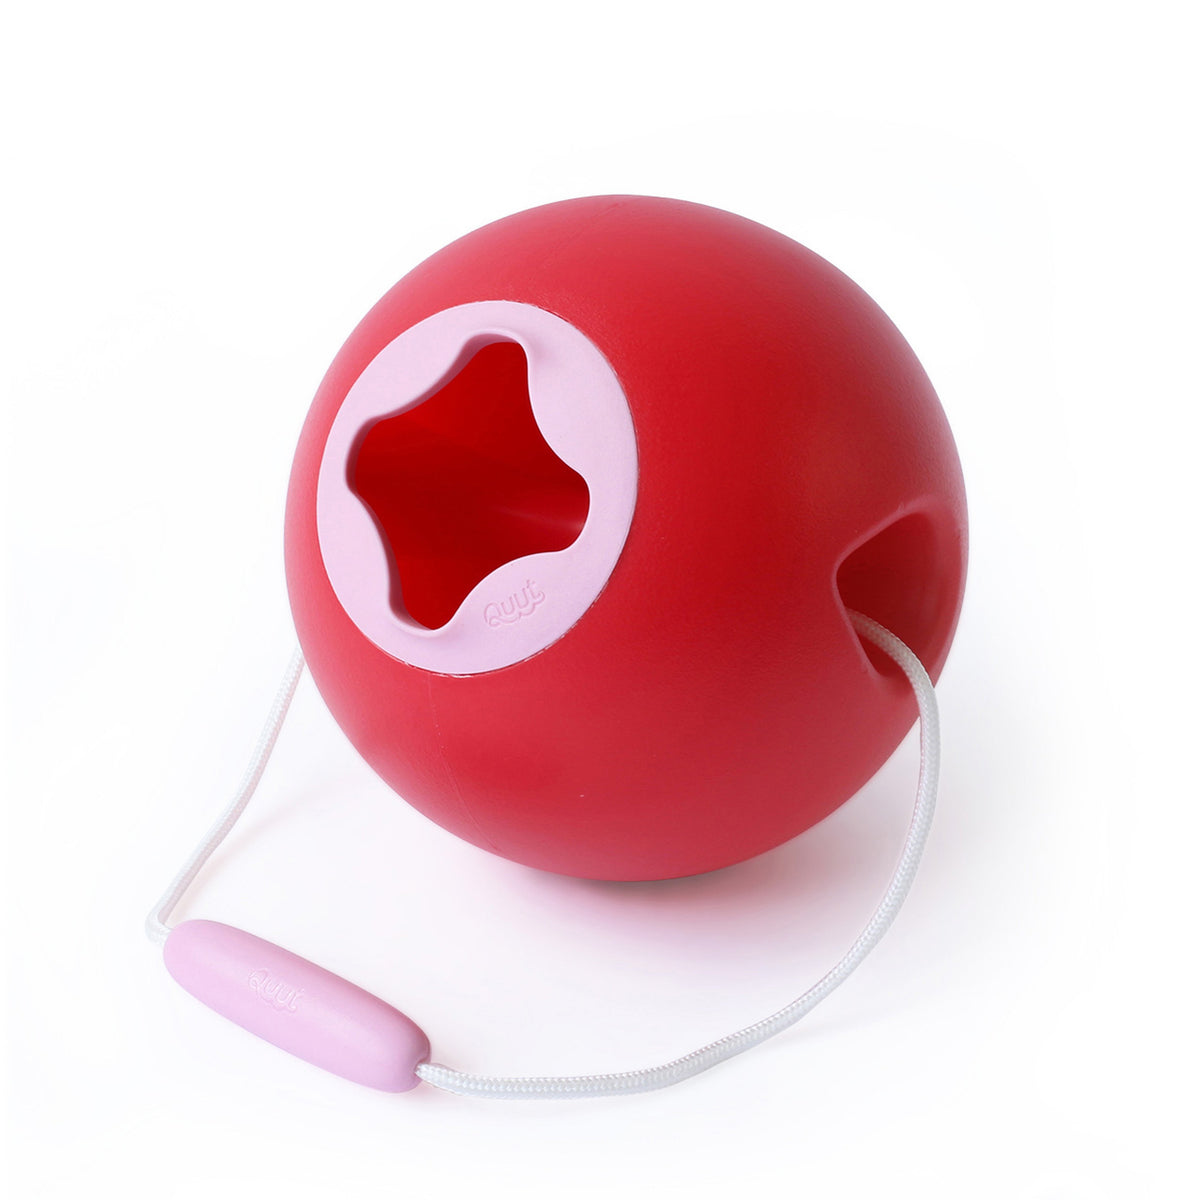 quut-ballo-cherry-red-sweet-pink- (2)